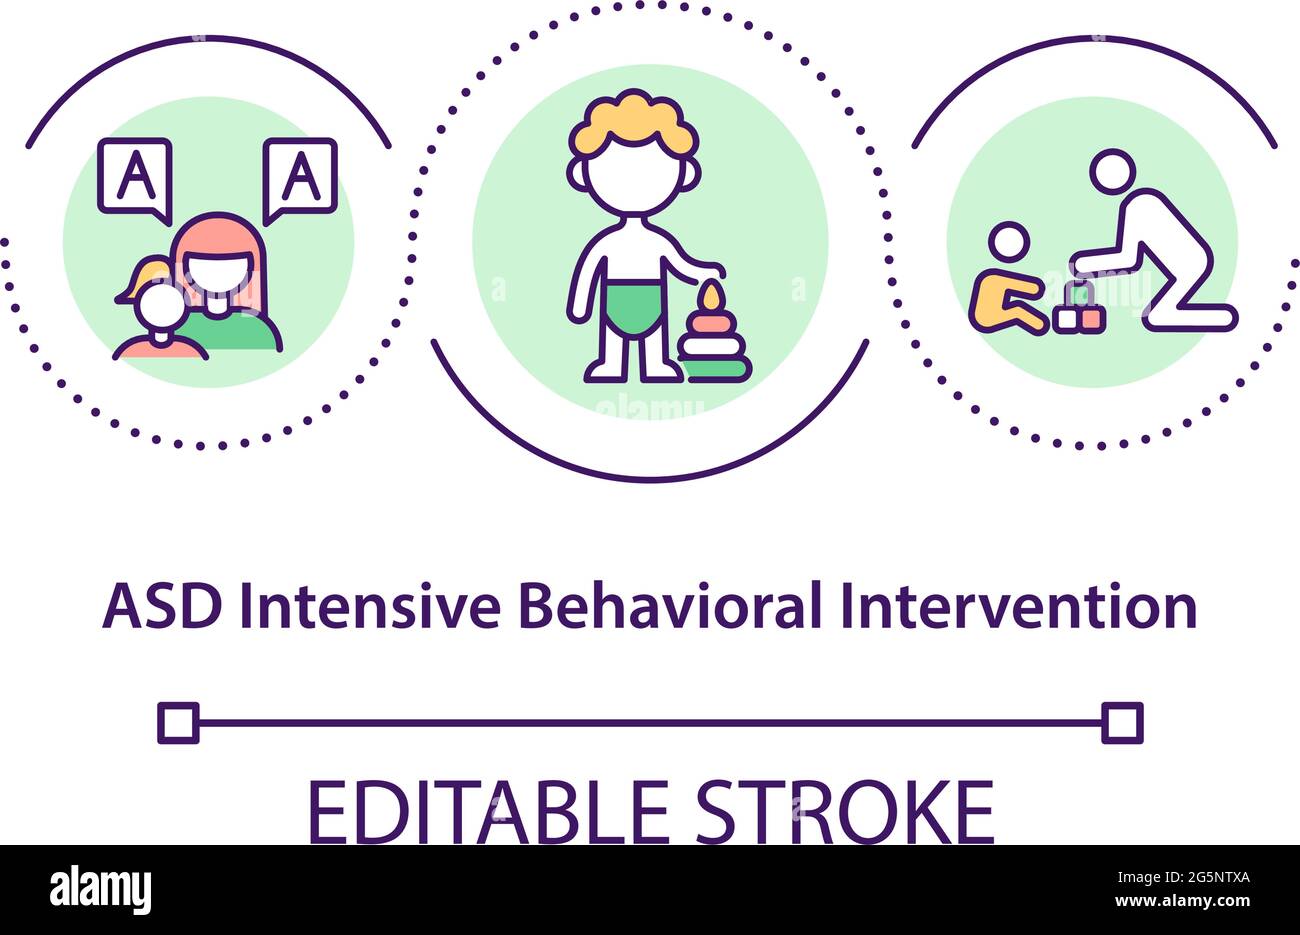 ASD intensive behavioral intervention concept icon Stock Vector